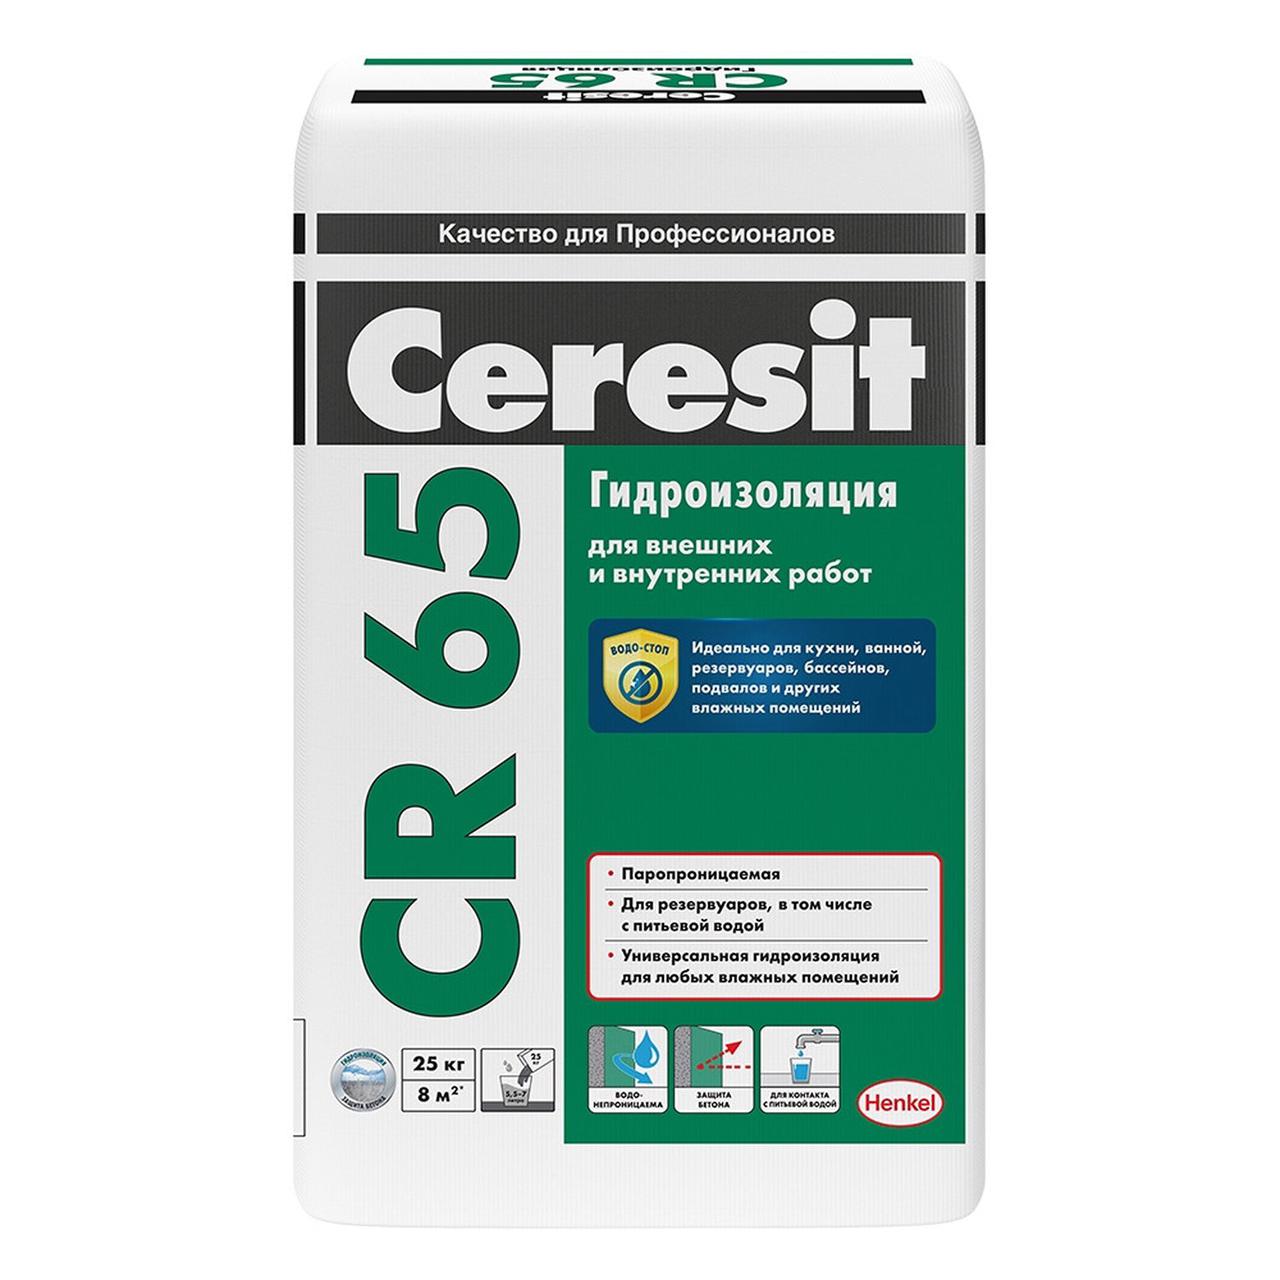 Ceresir CR 65 Цементная гидроизоляционная масса 25 кг